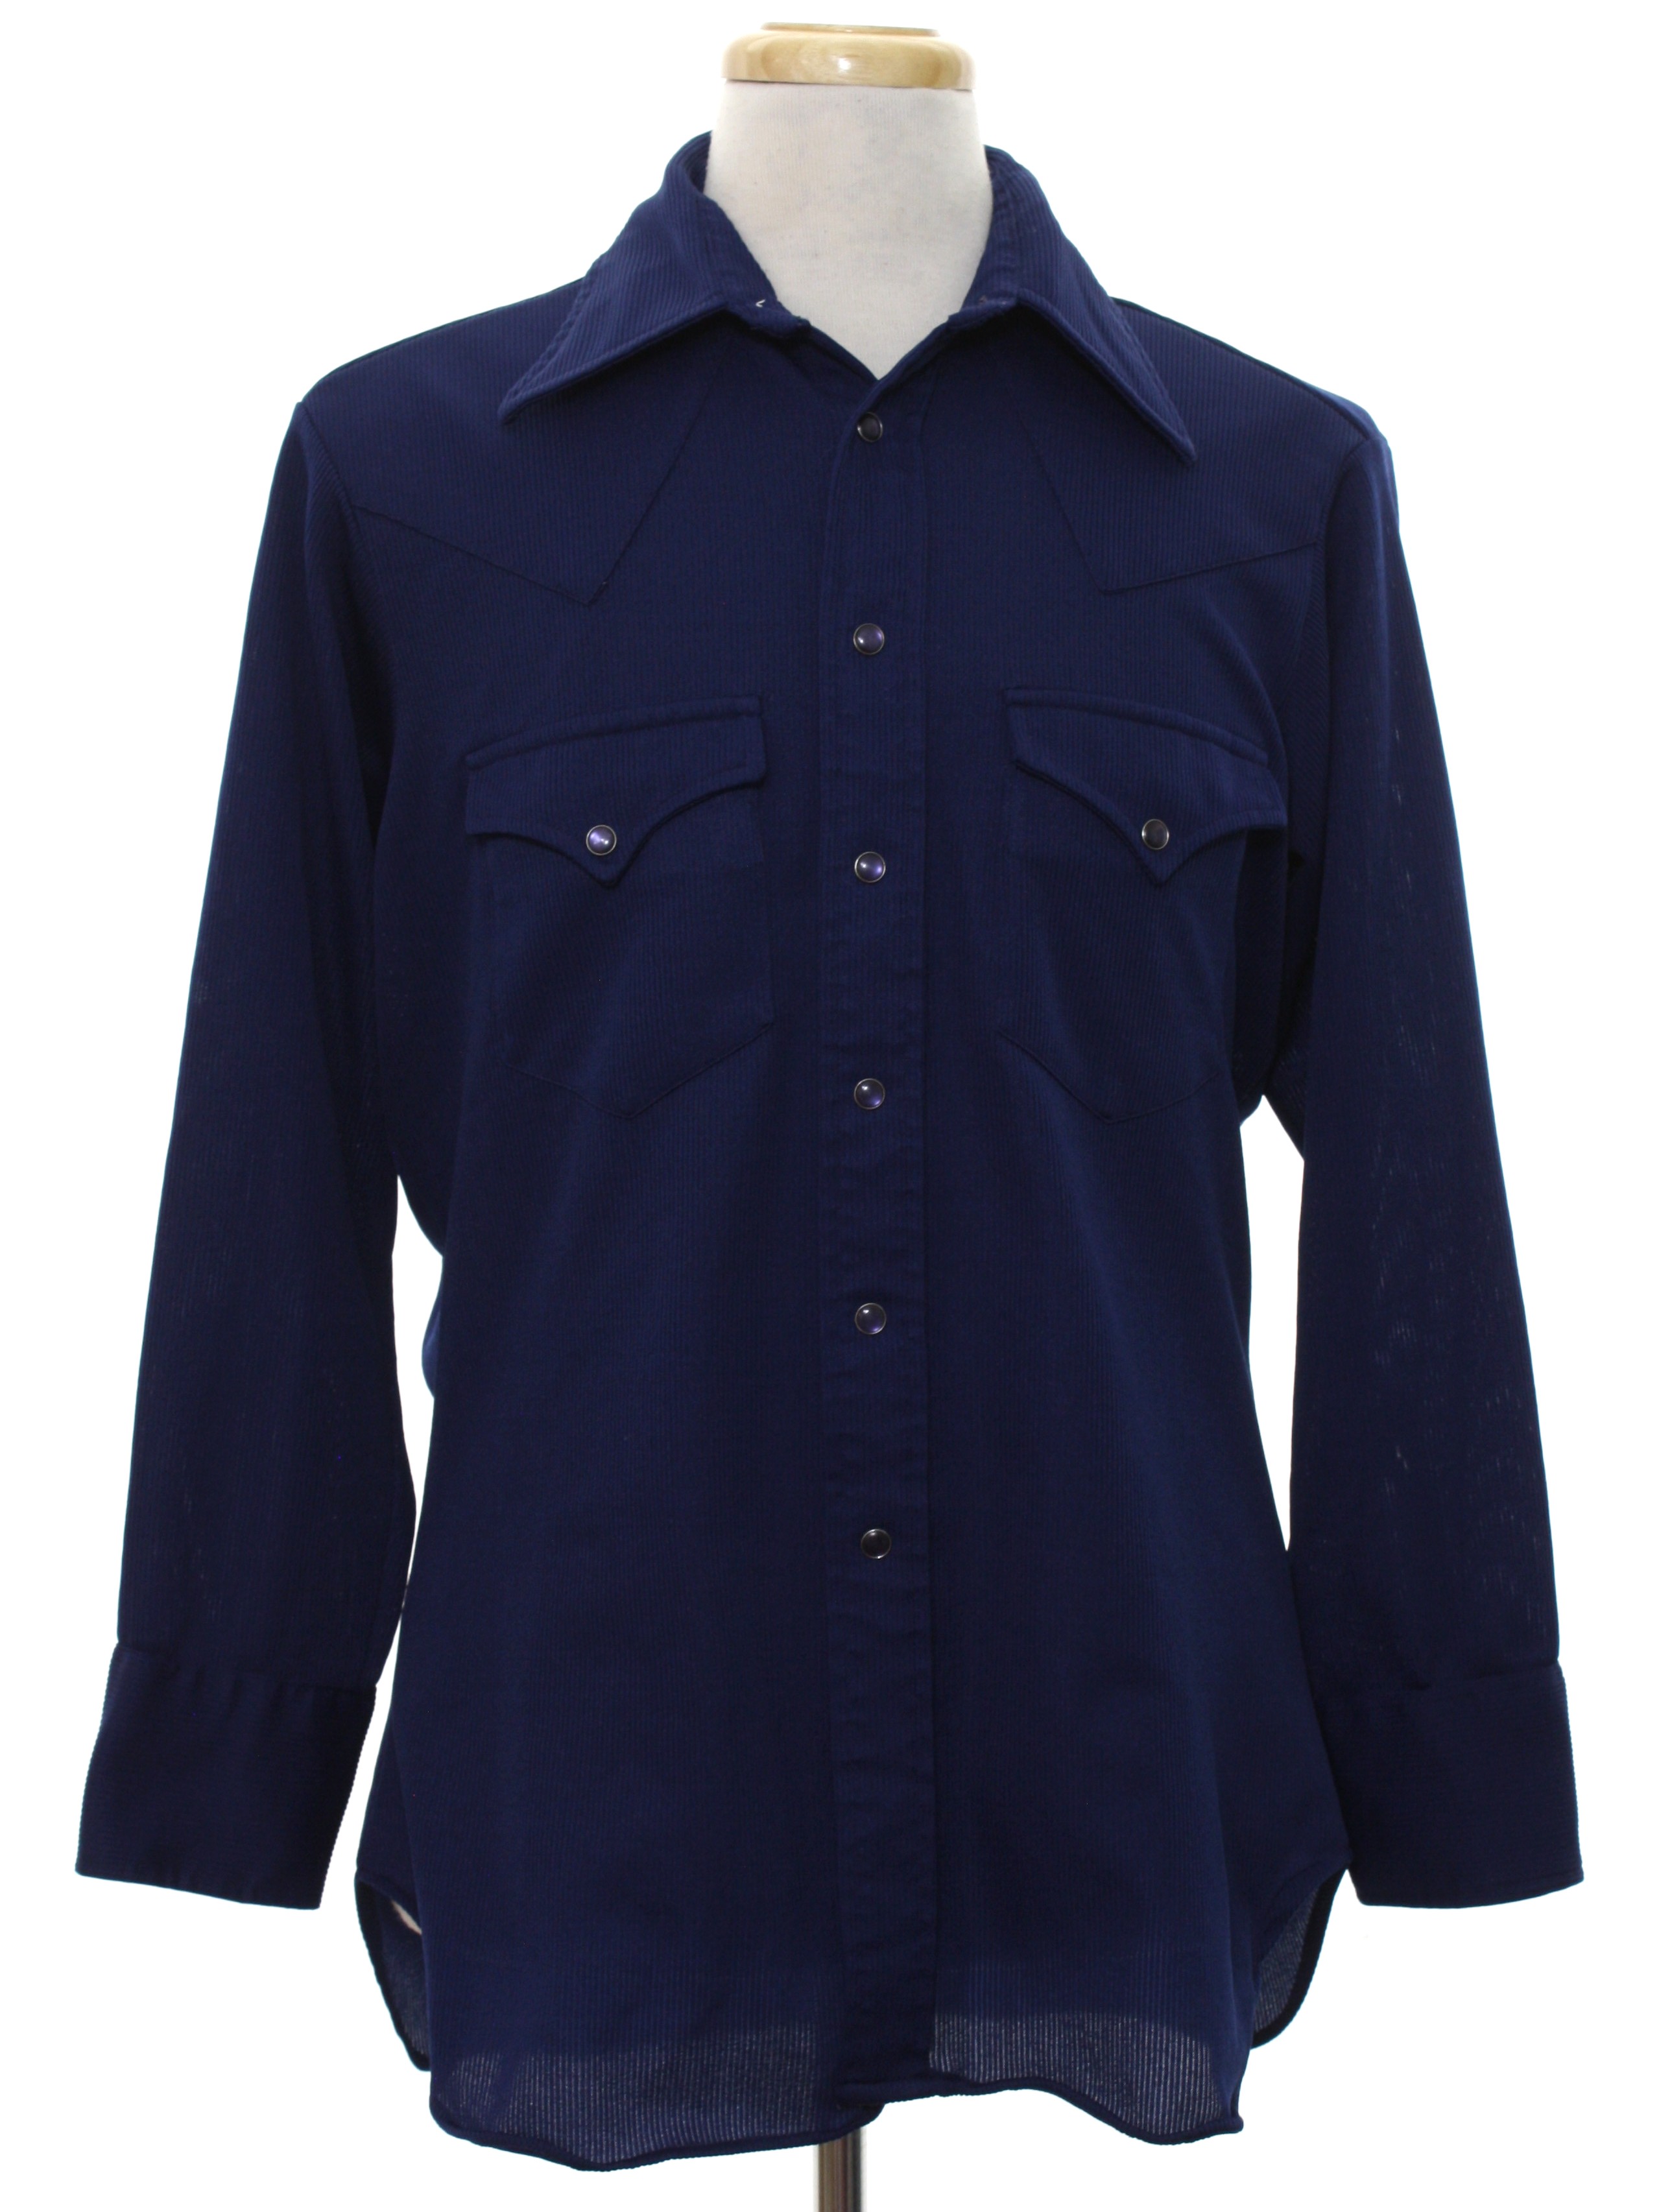 70s Retro Western Shirt: Late 70s -Sheplers- Mens navy blue rib knit ...